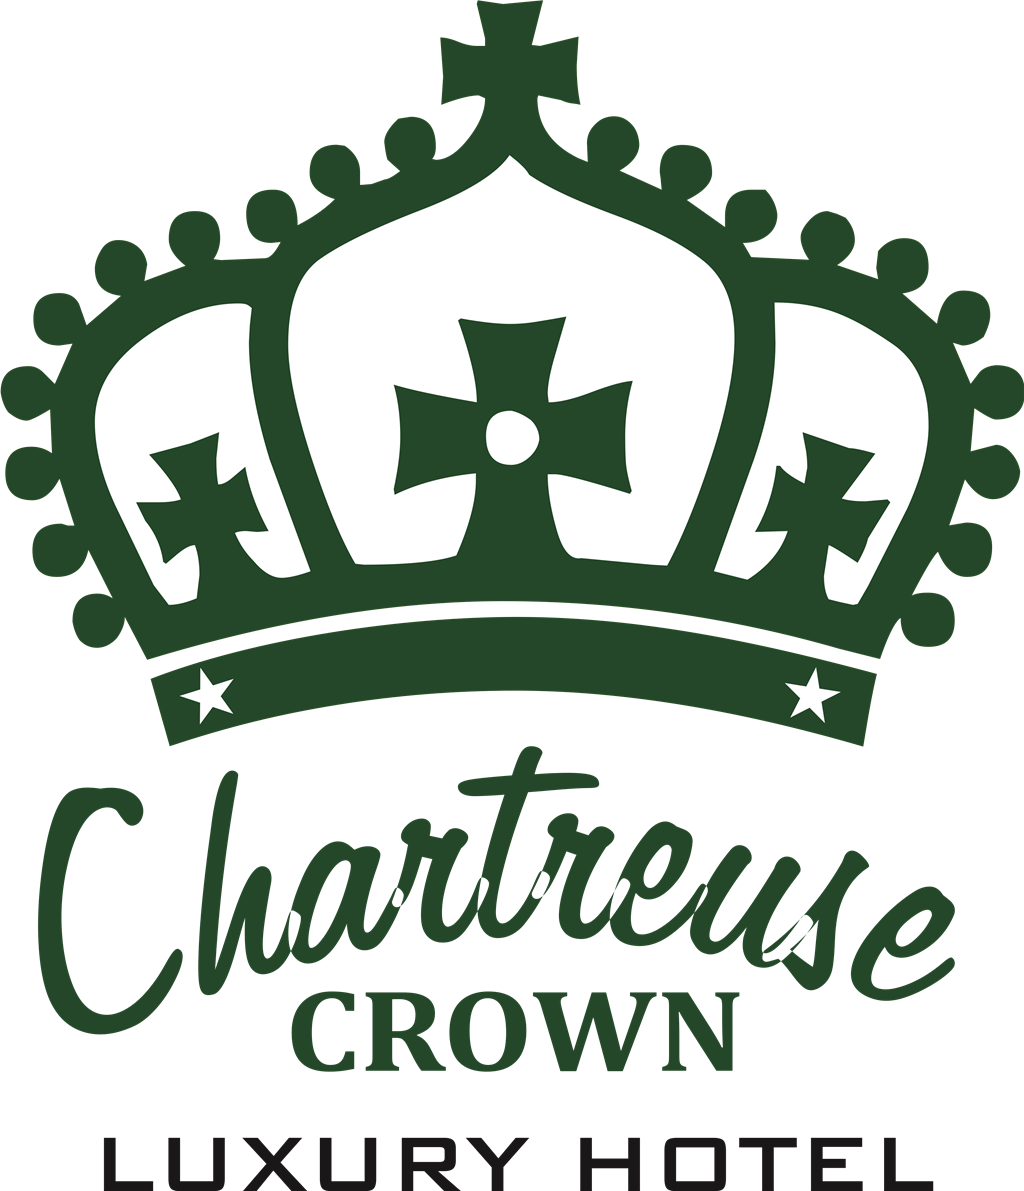 Chartreuse Crown logotype, transparent .png, medium, large